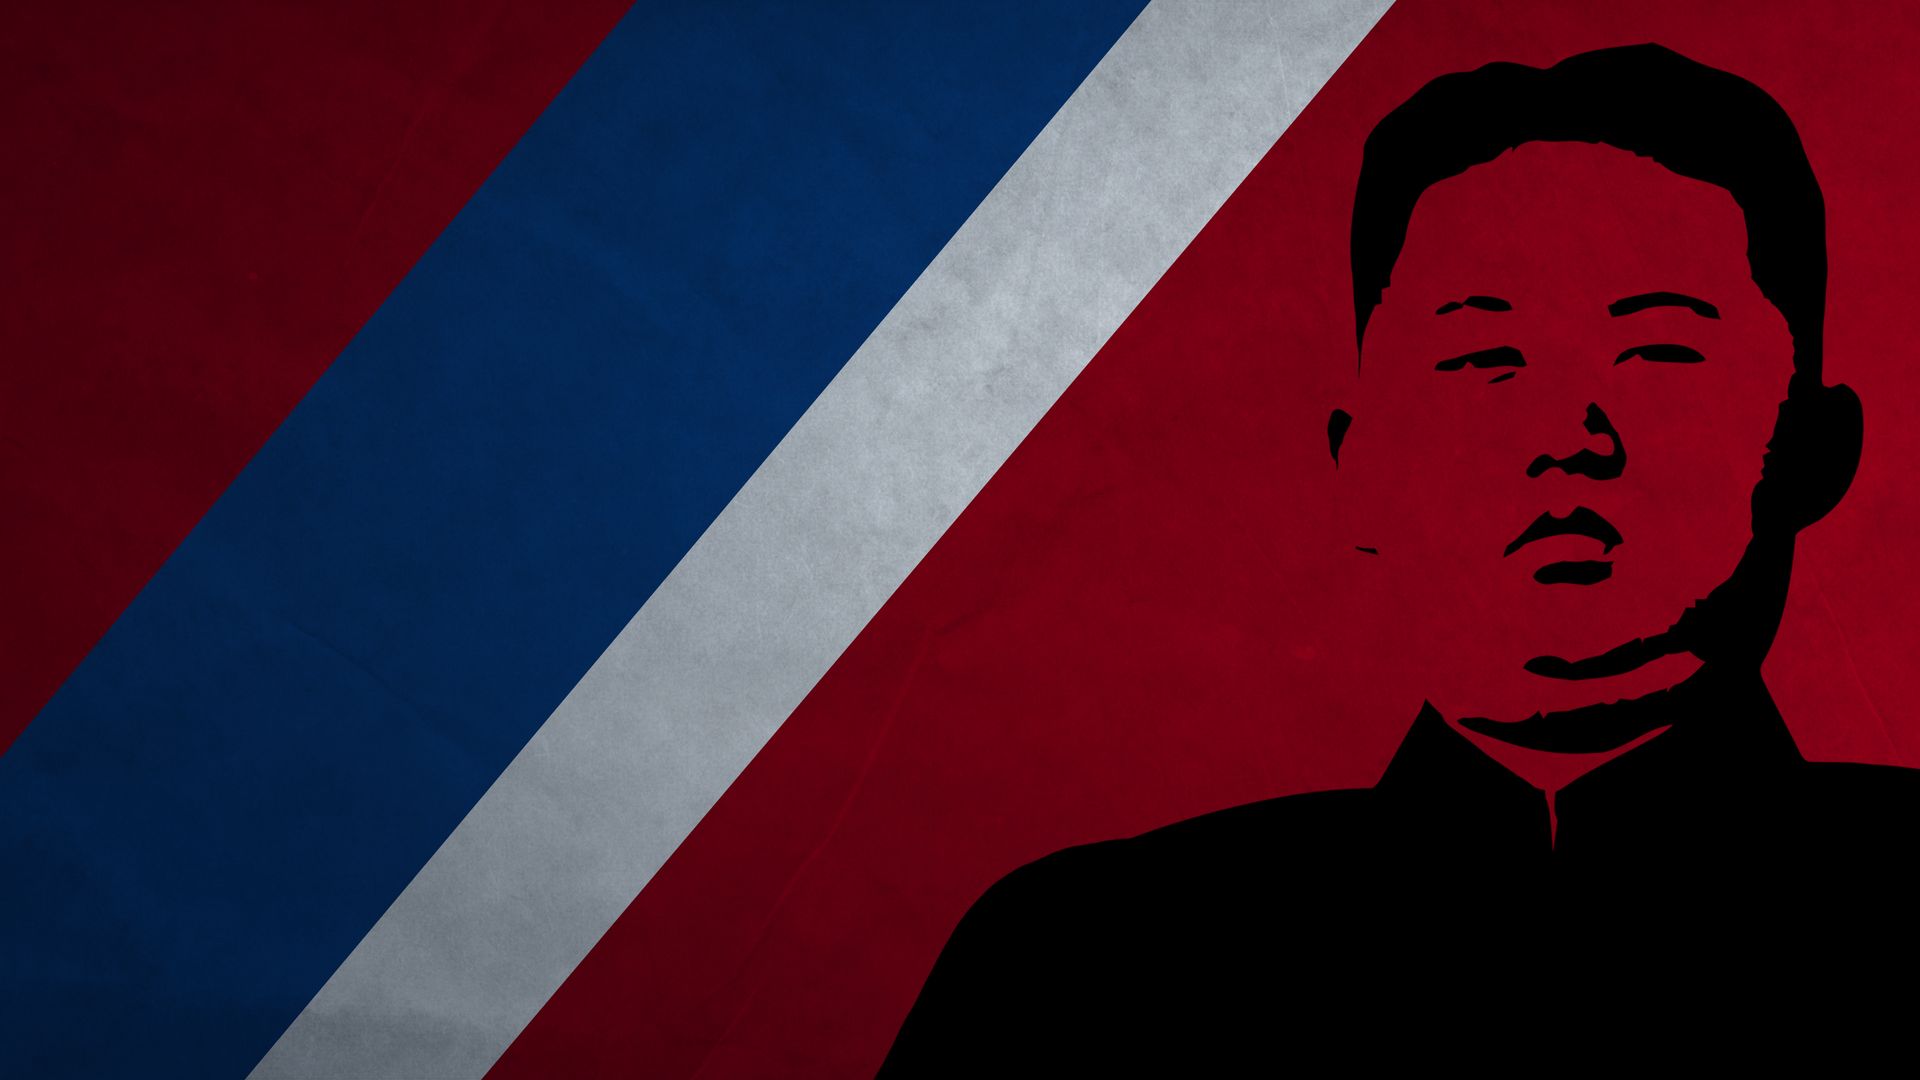 North Korea: The Hermit Kingdom